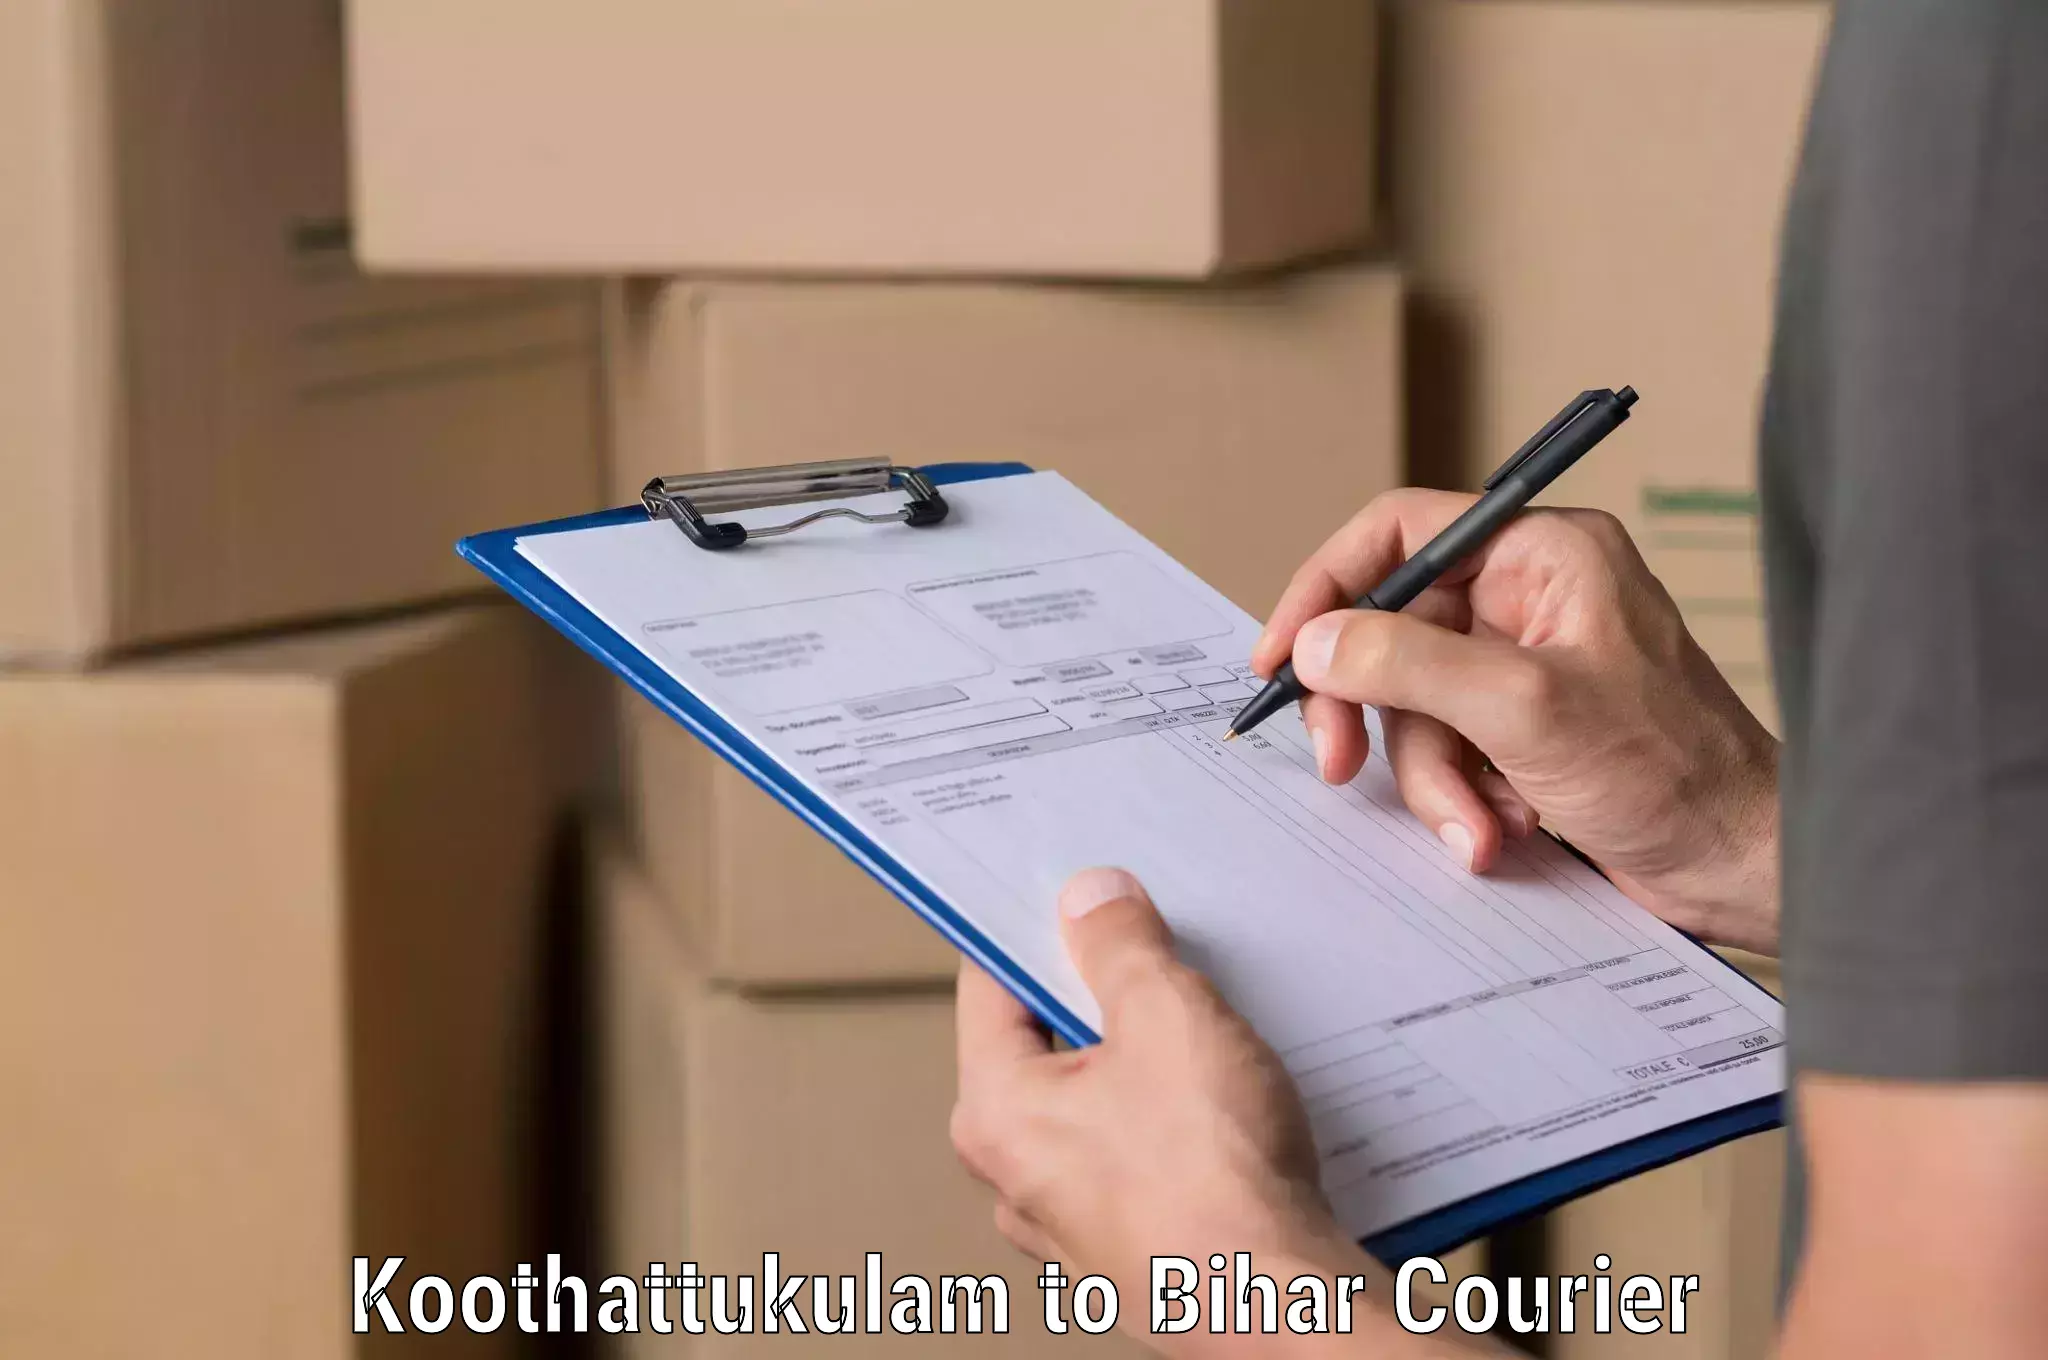 Global shipping networks Koothattukulam to Patna